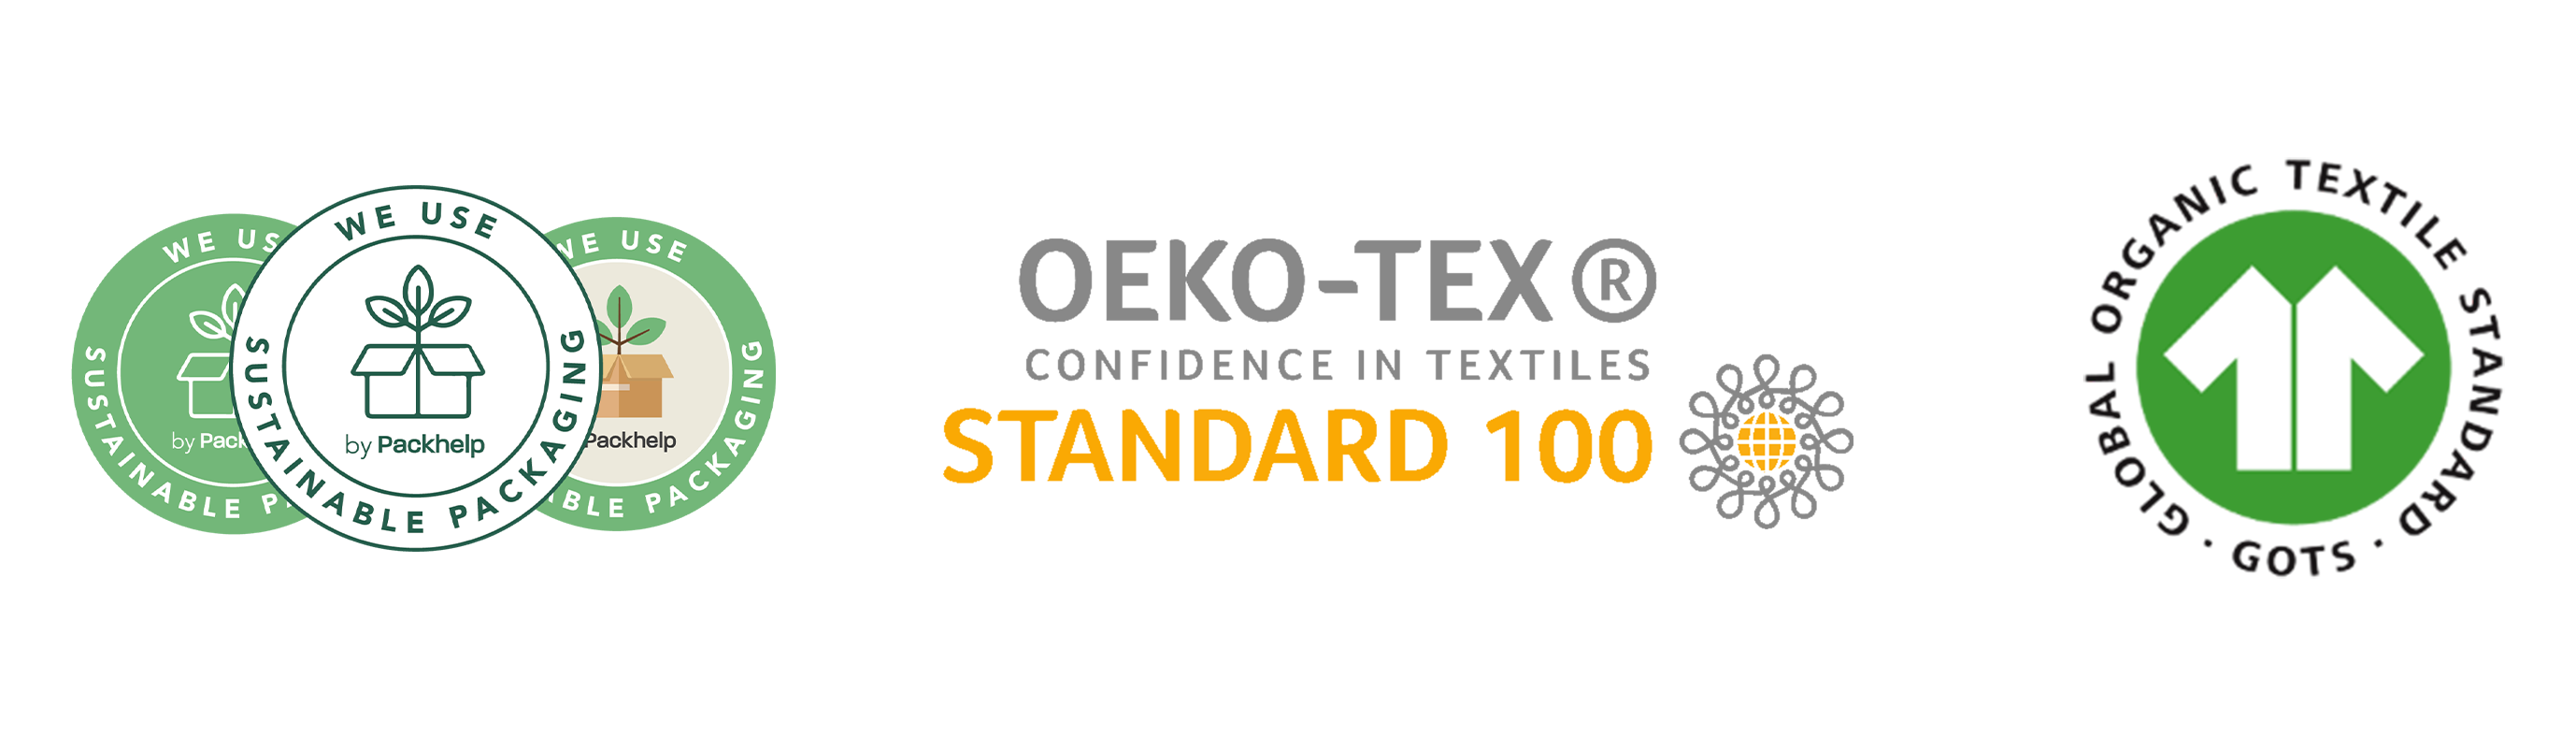 Oeko-tex - GOTS